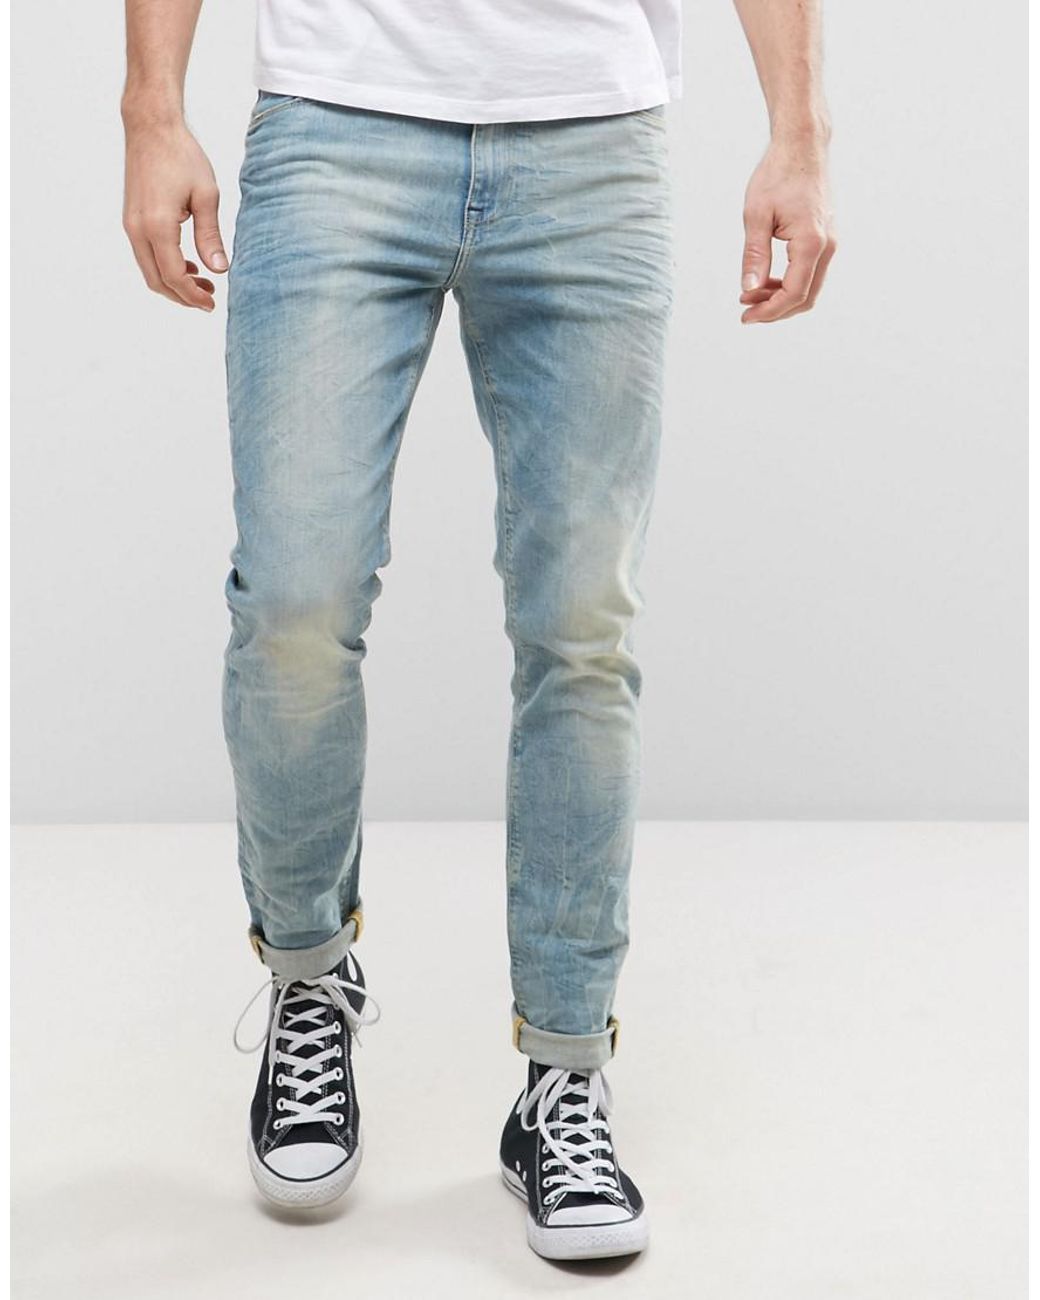 ASOS Denim Skinny Jeans In 12.5oz Bleach Wash Blue for Men - Save 55% ...